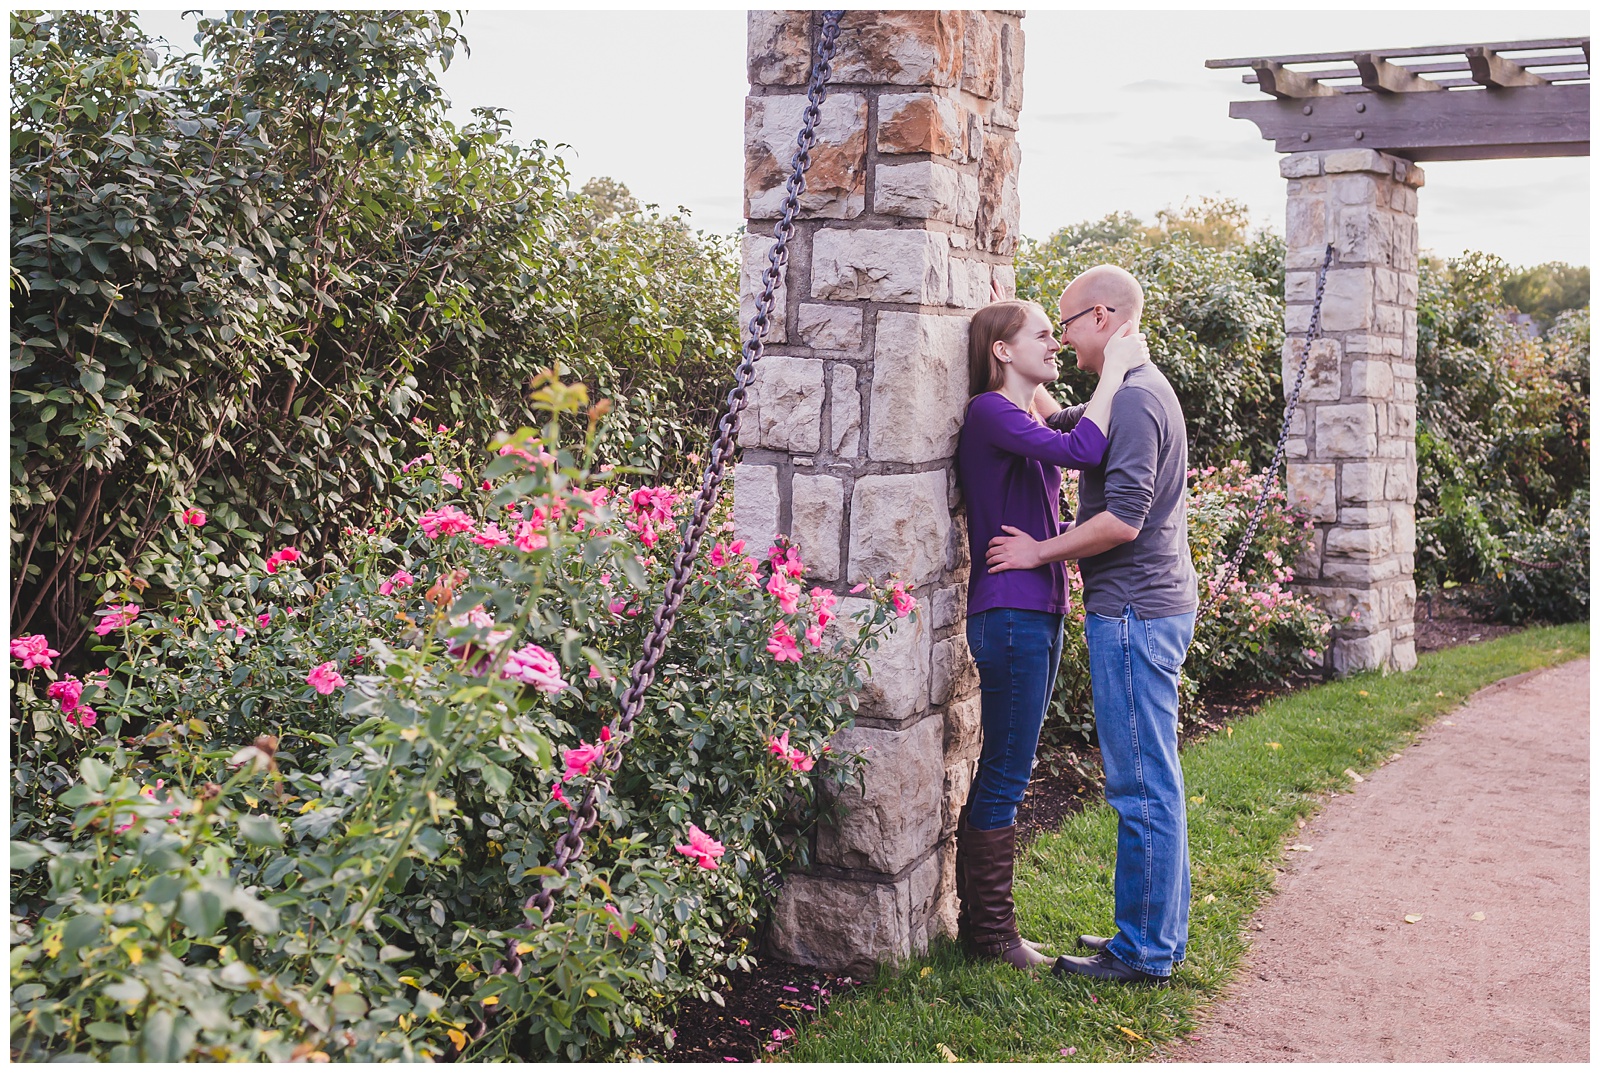 Engagement photography at Loose Park by Kansas City wedding photographers Wisdom-Watson Weddings.